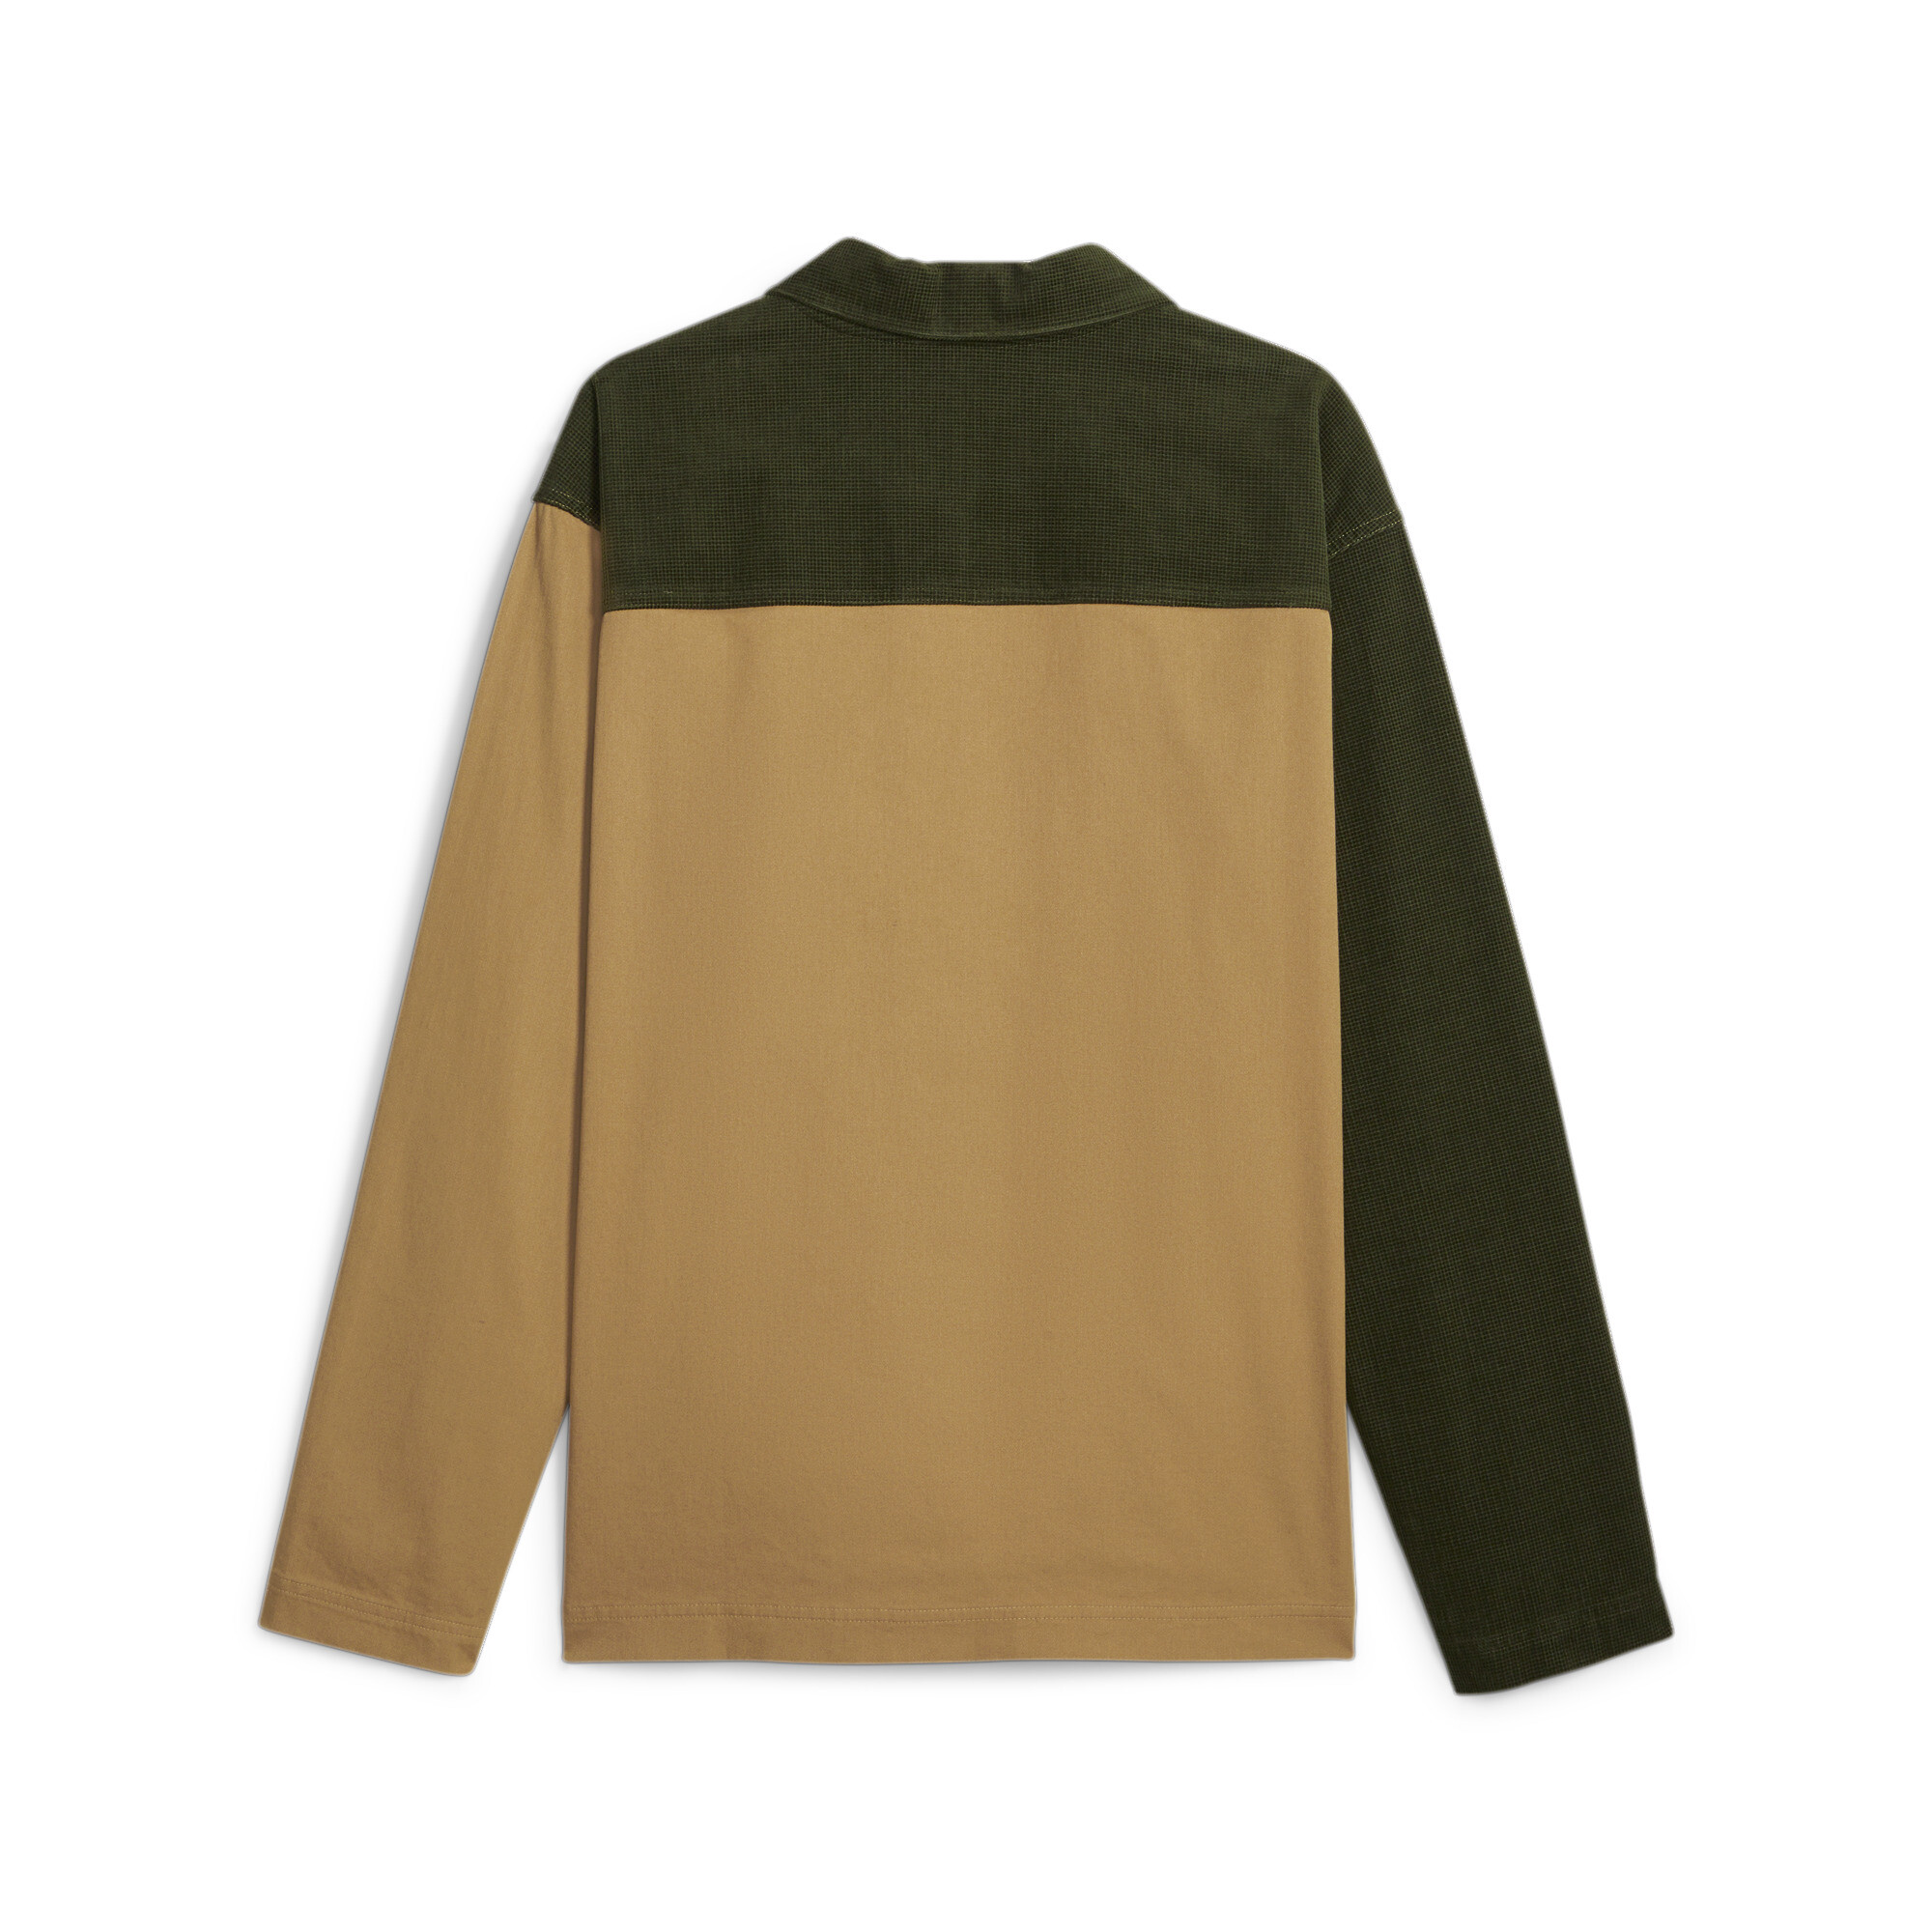 Men's Puma DOWNTOWN's Corduroy Shirt, Green, Size L, Clothing